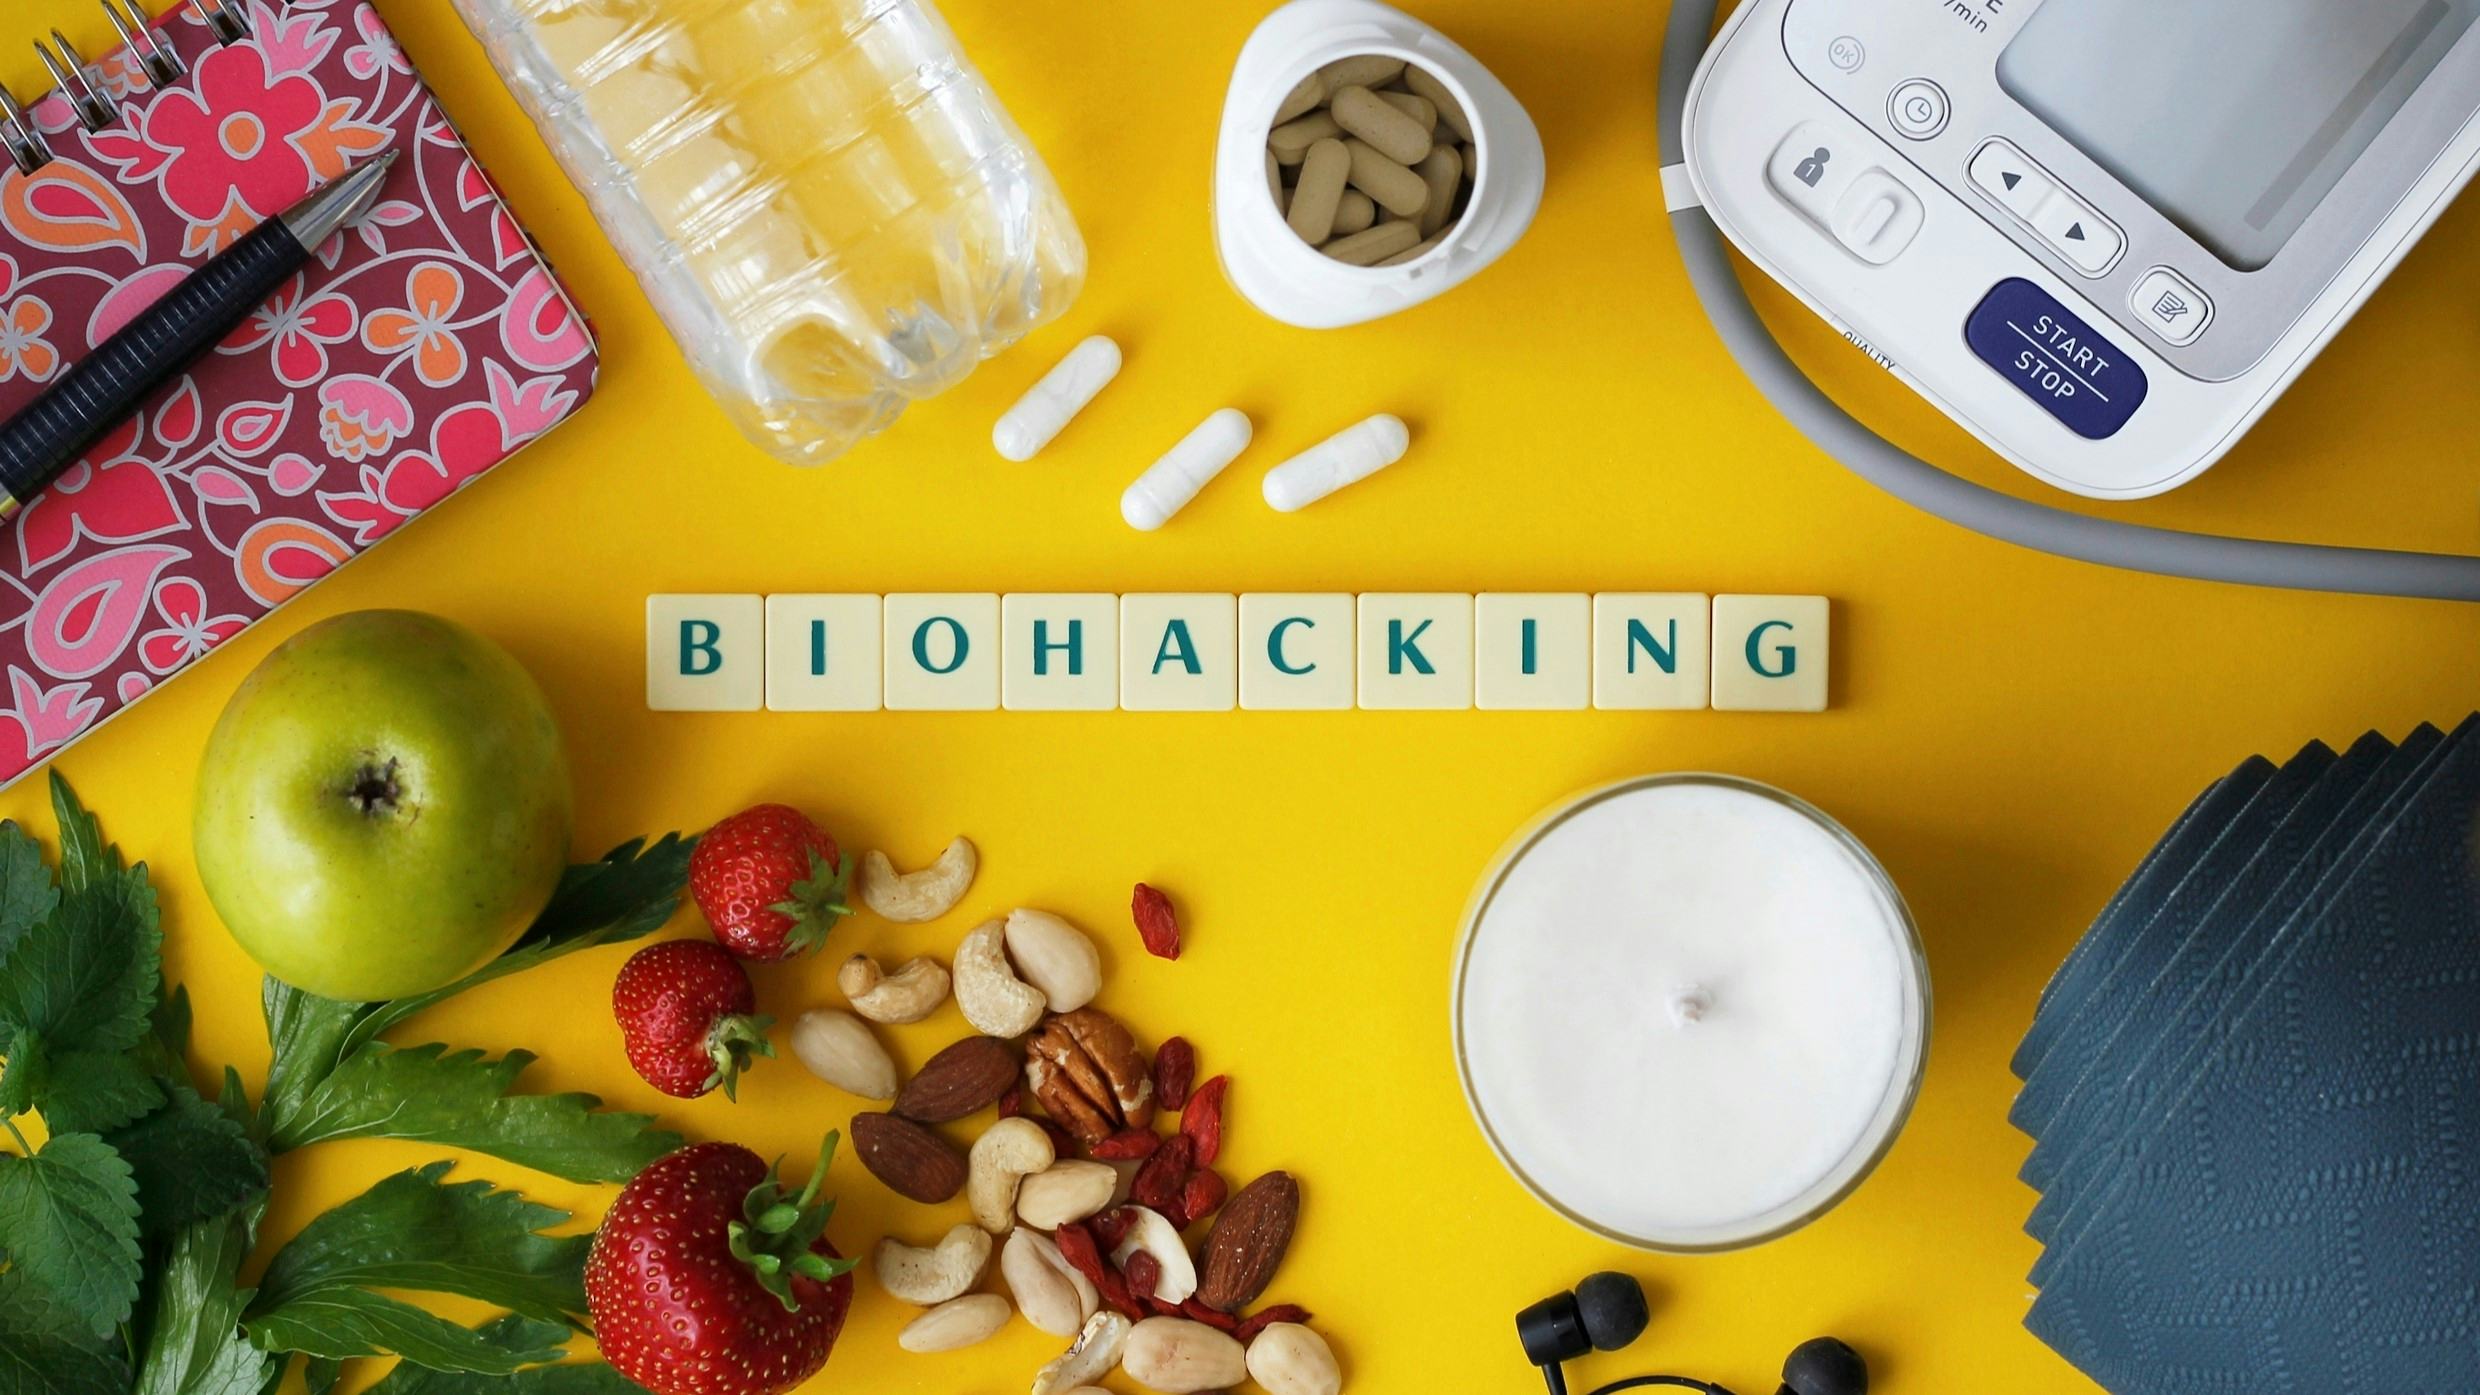 3 horecatrends uitgelegd: biohacking, maximalisme en biotech